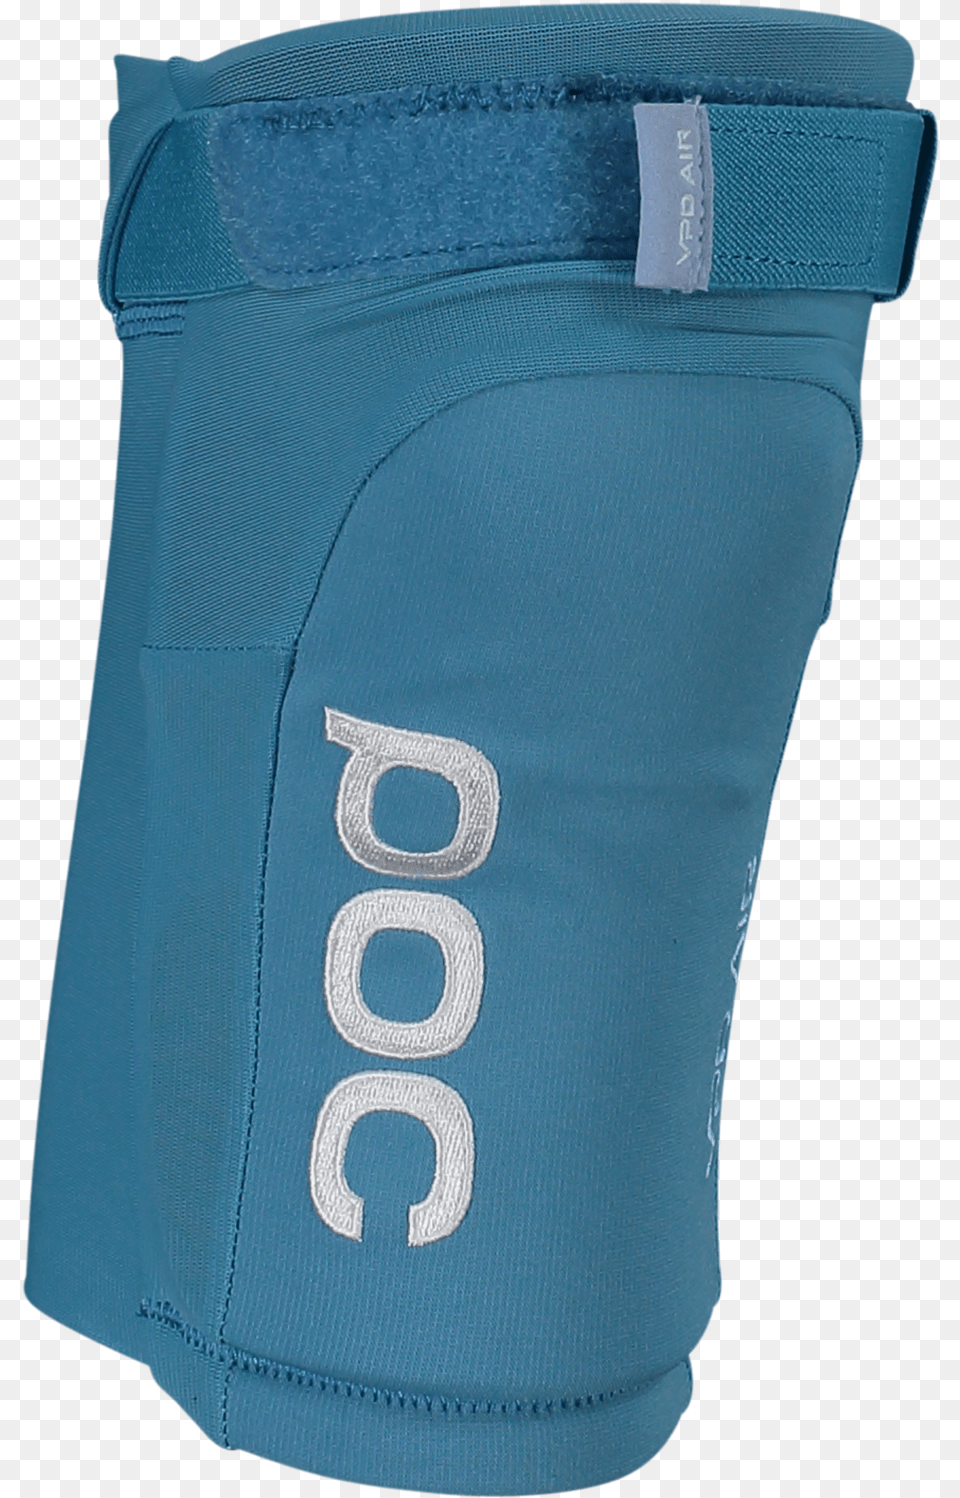 Poc Joint Vpd Air Knee Pads In Blue Knee Pad, Accessories, Bag, Brace, Handbag Png Image